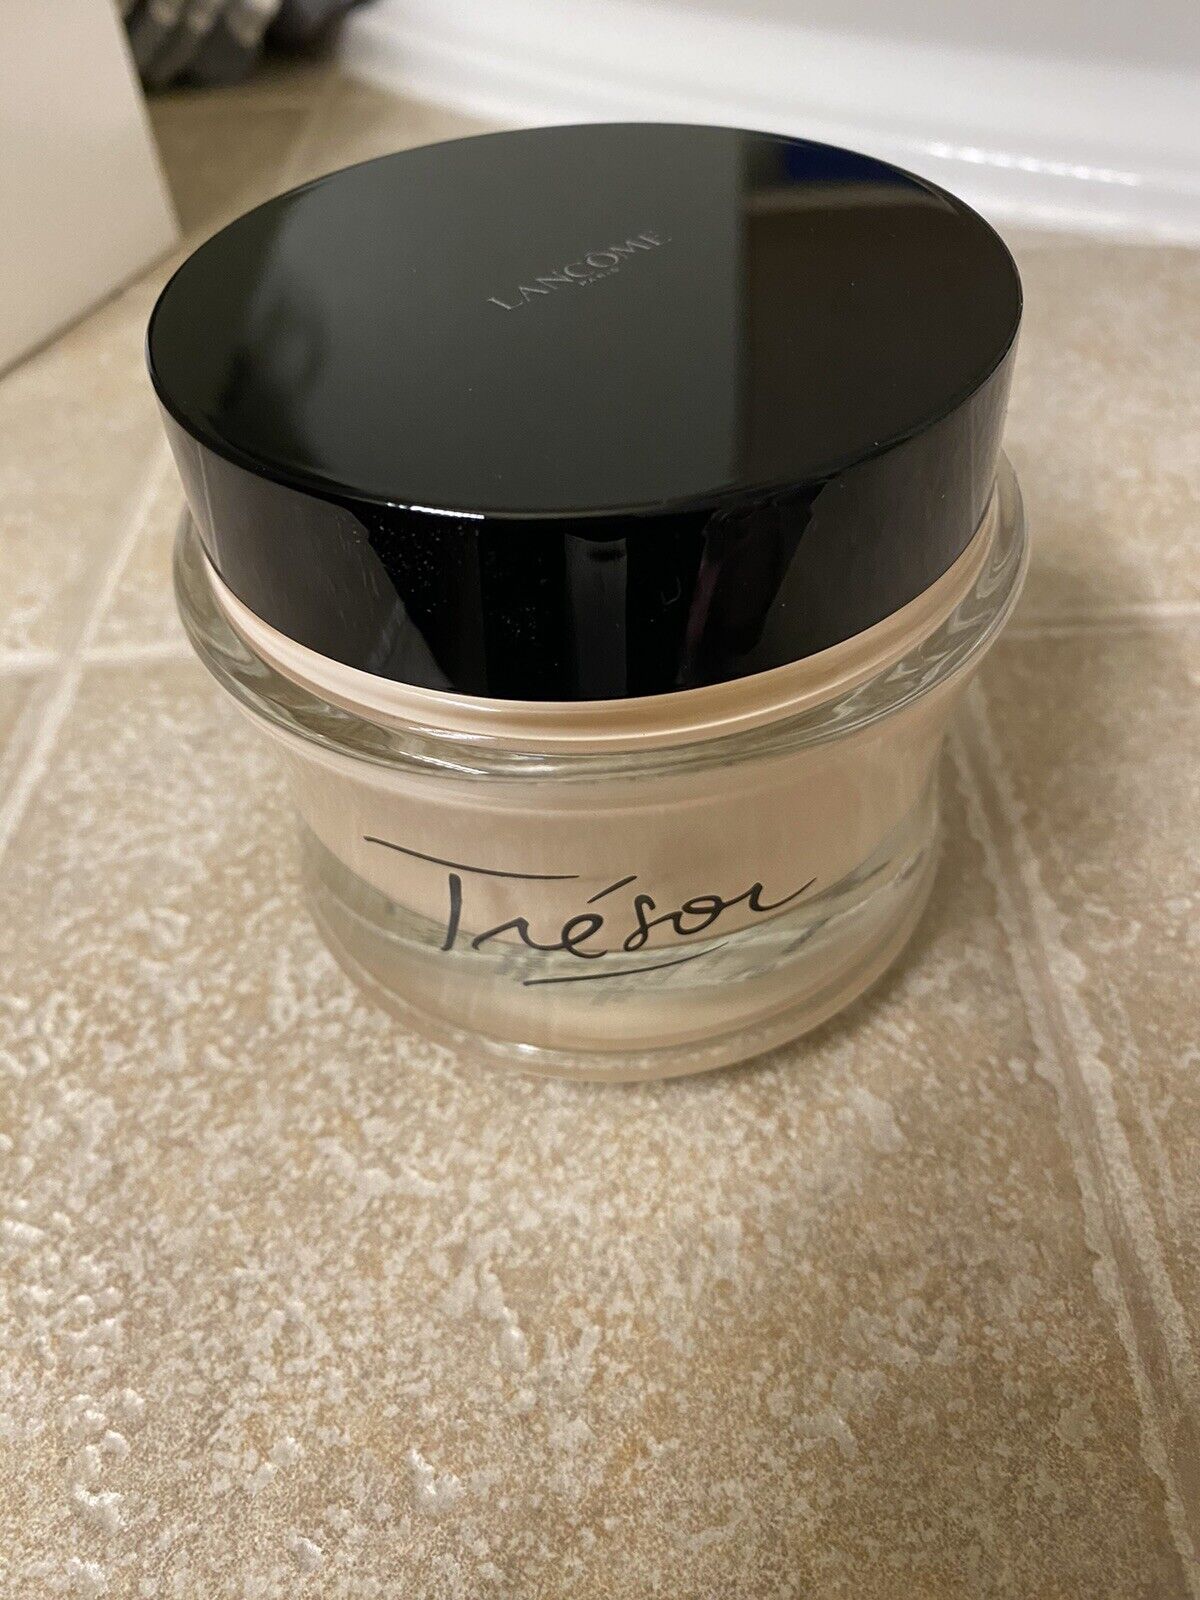 Tresor Lancome Perfumed Body Cream/Lotion 6.7 oz/200ml, Brand New In Box.